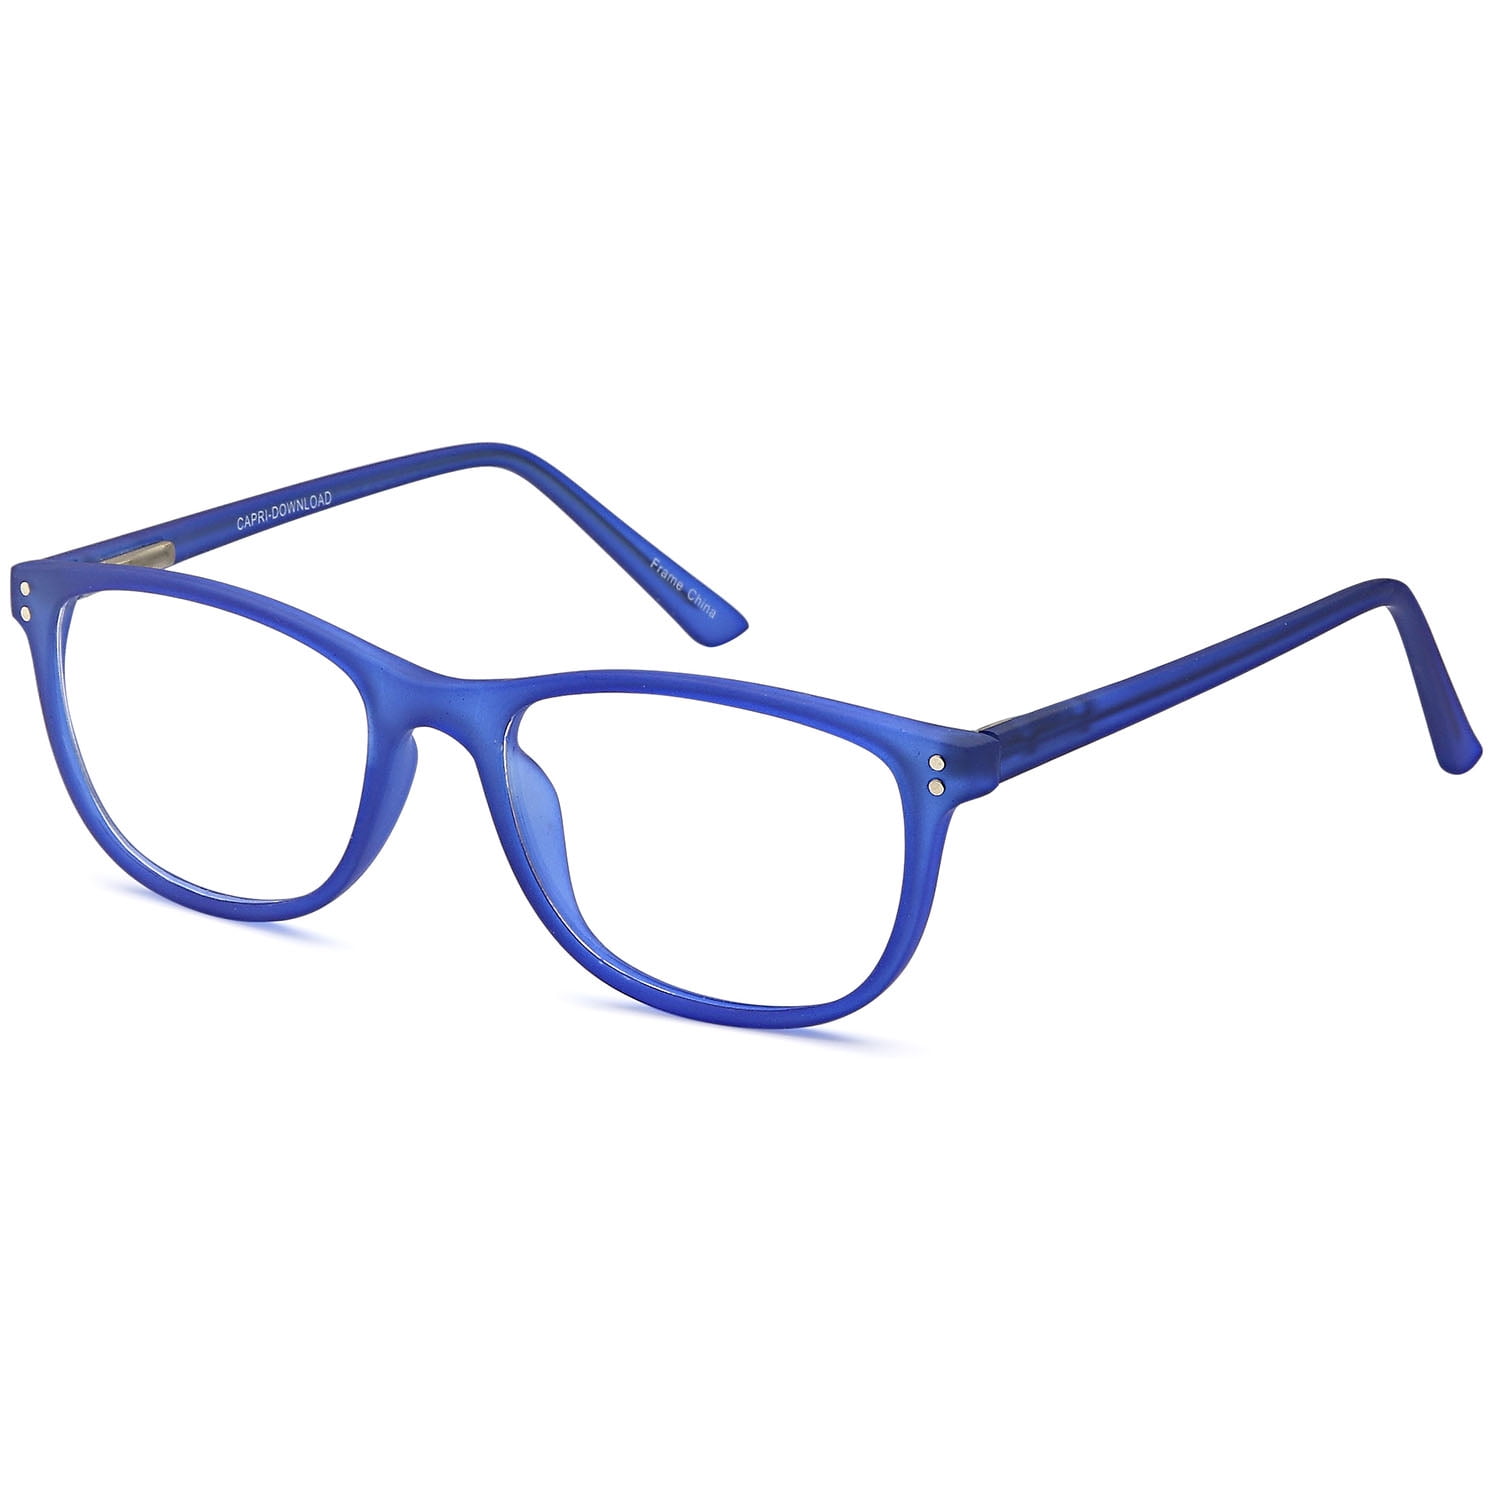 Unisex Eyeglasses 49 18 135 Blue Plastic - Walmart.com